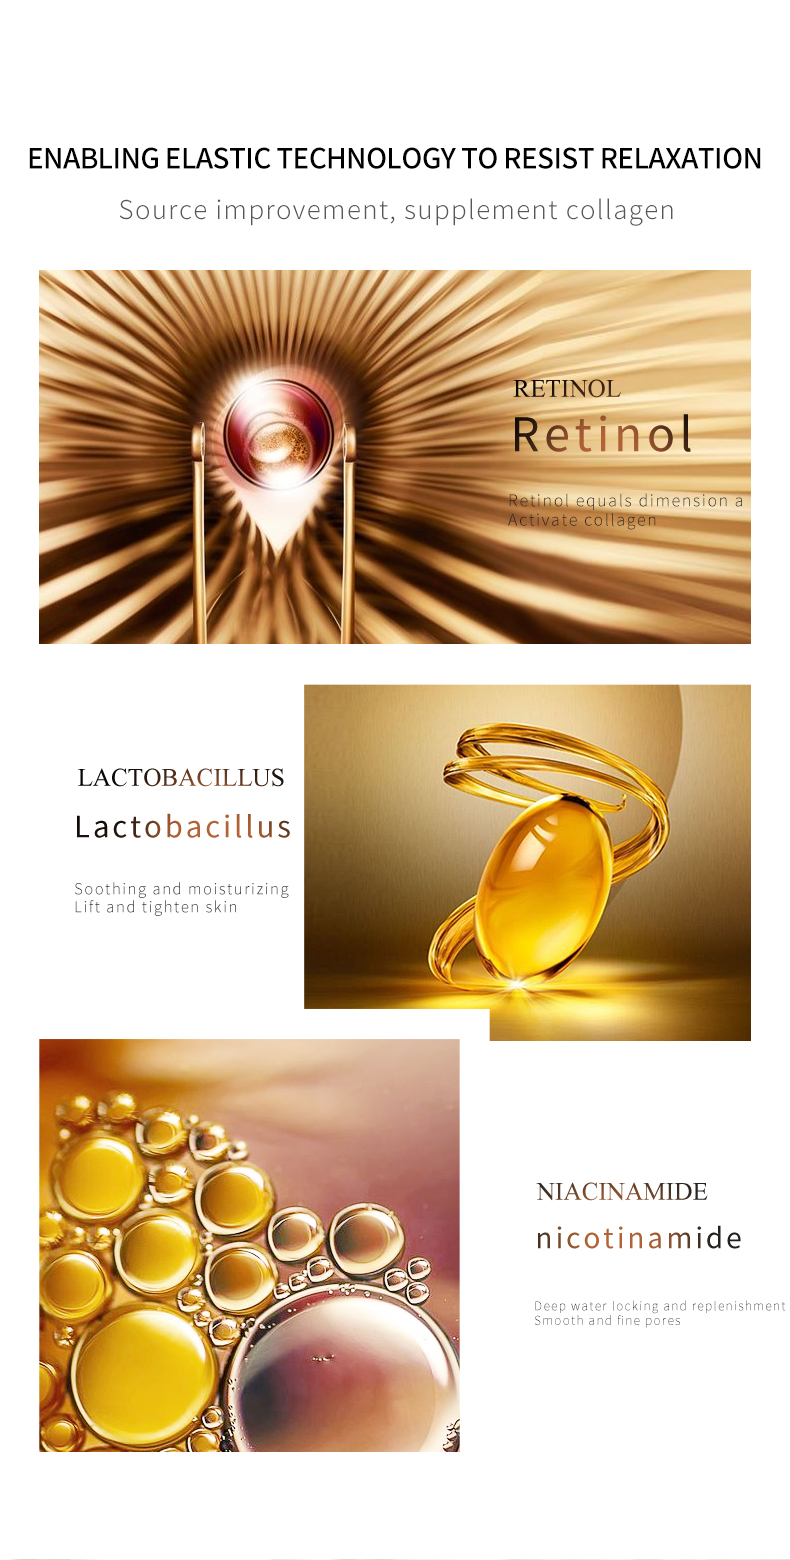 Retinol skin care products